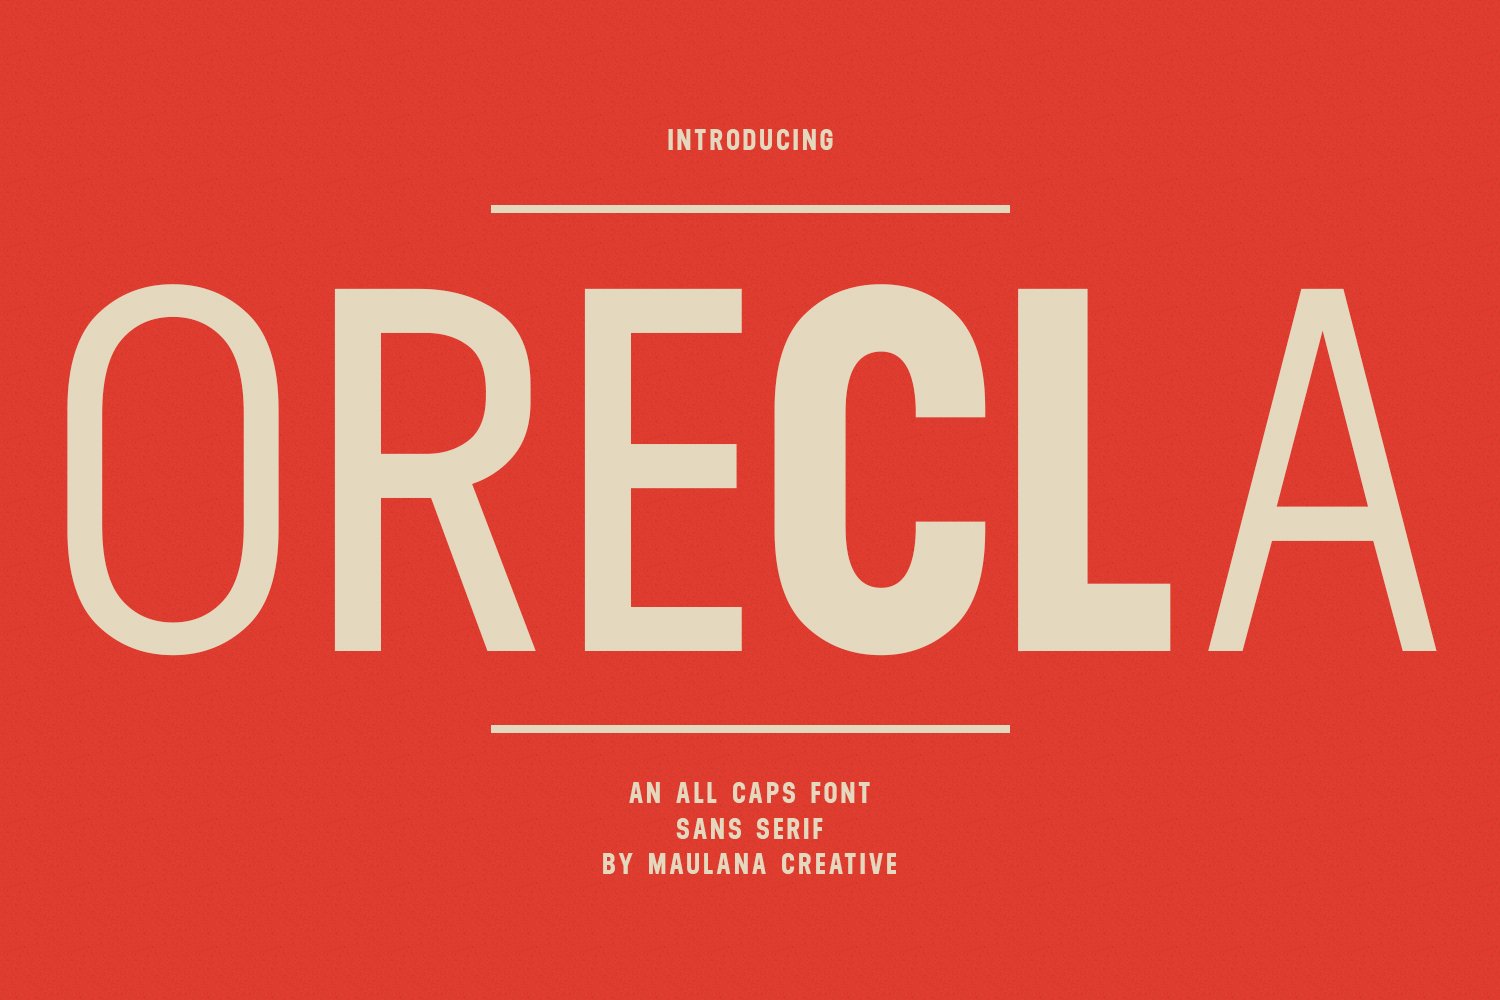 Orecla Sans Serif Display Font cover image.